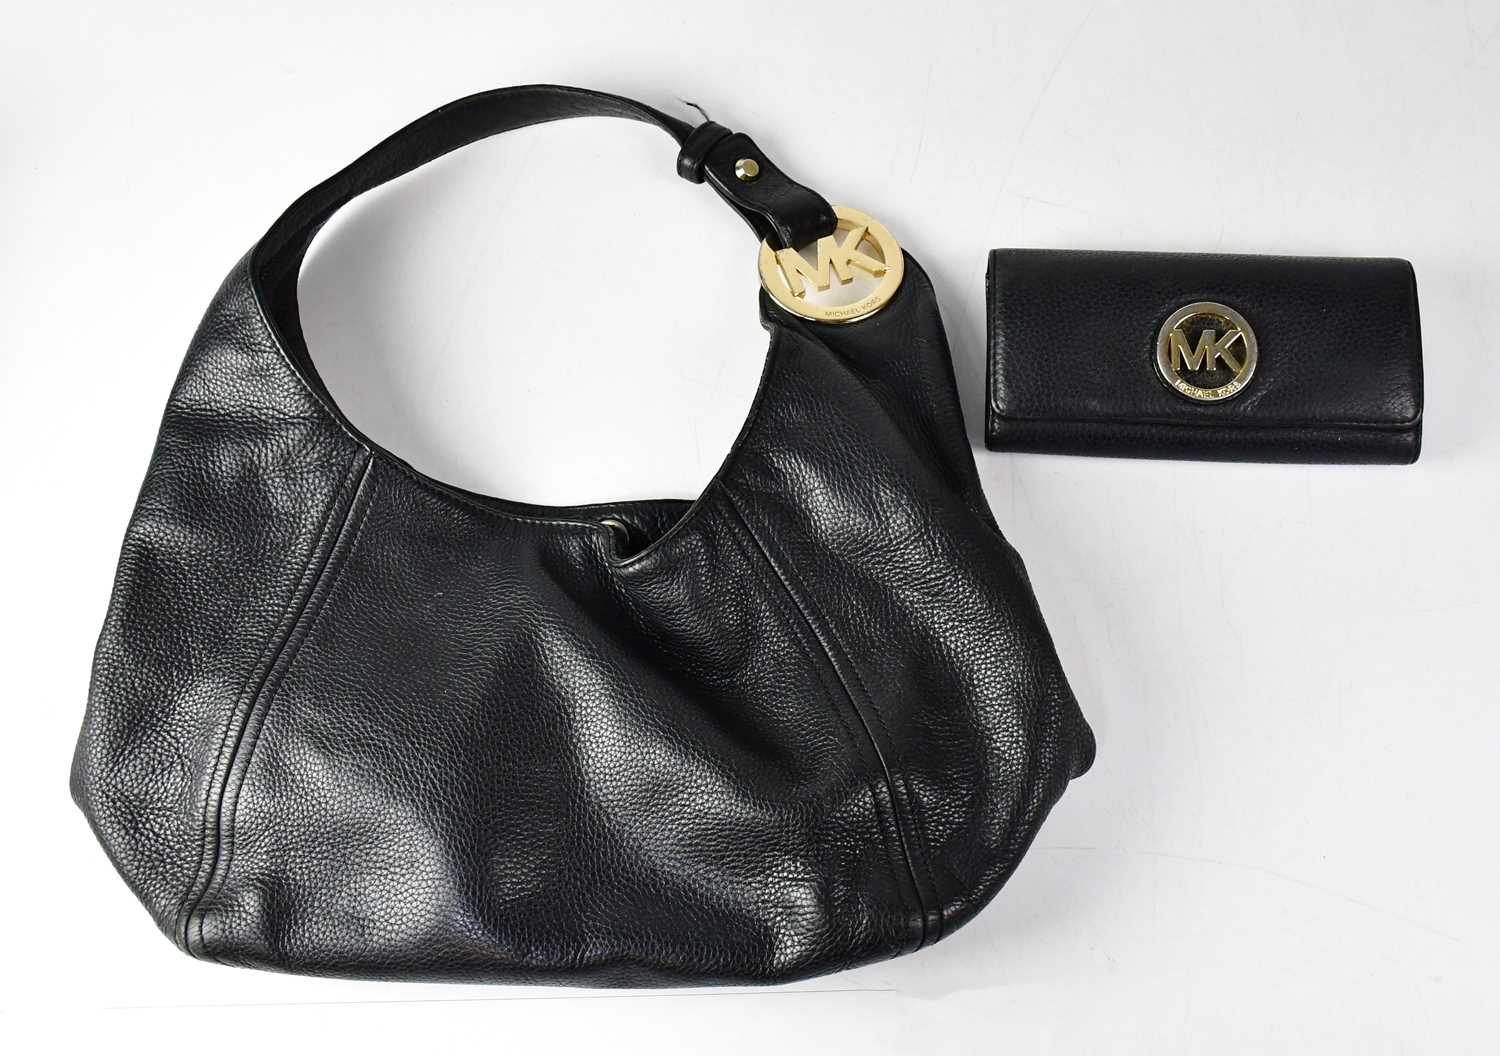 MICHAEL KORS; a black pebbled leather hobo shoulder bag, with a similar Michael Kors purse/wallet (